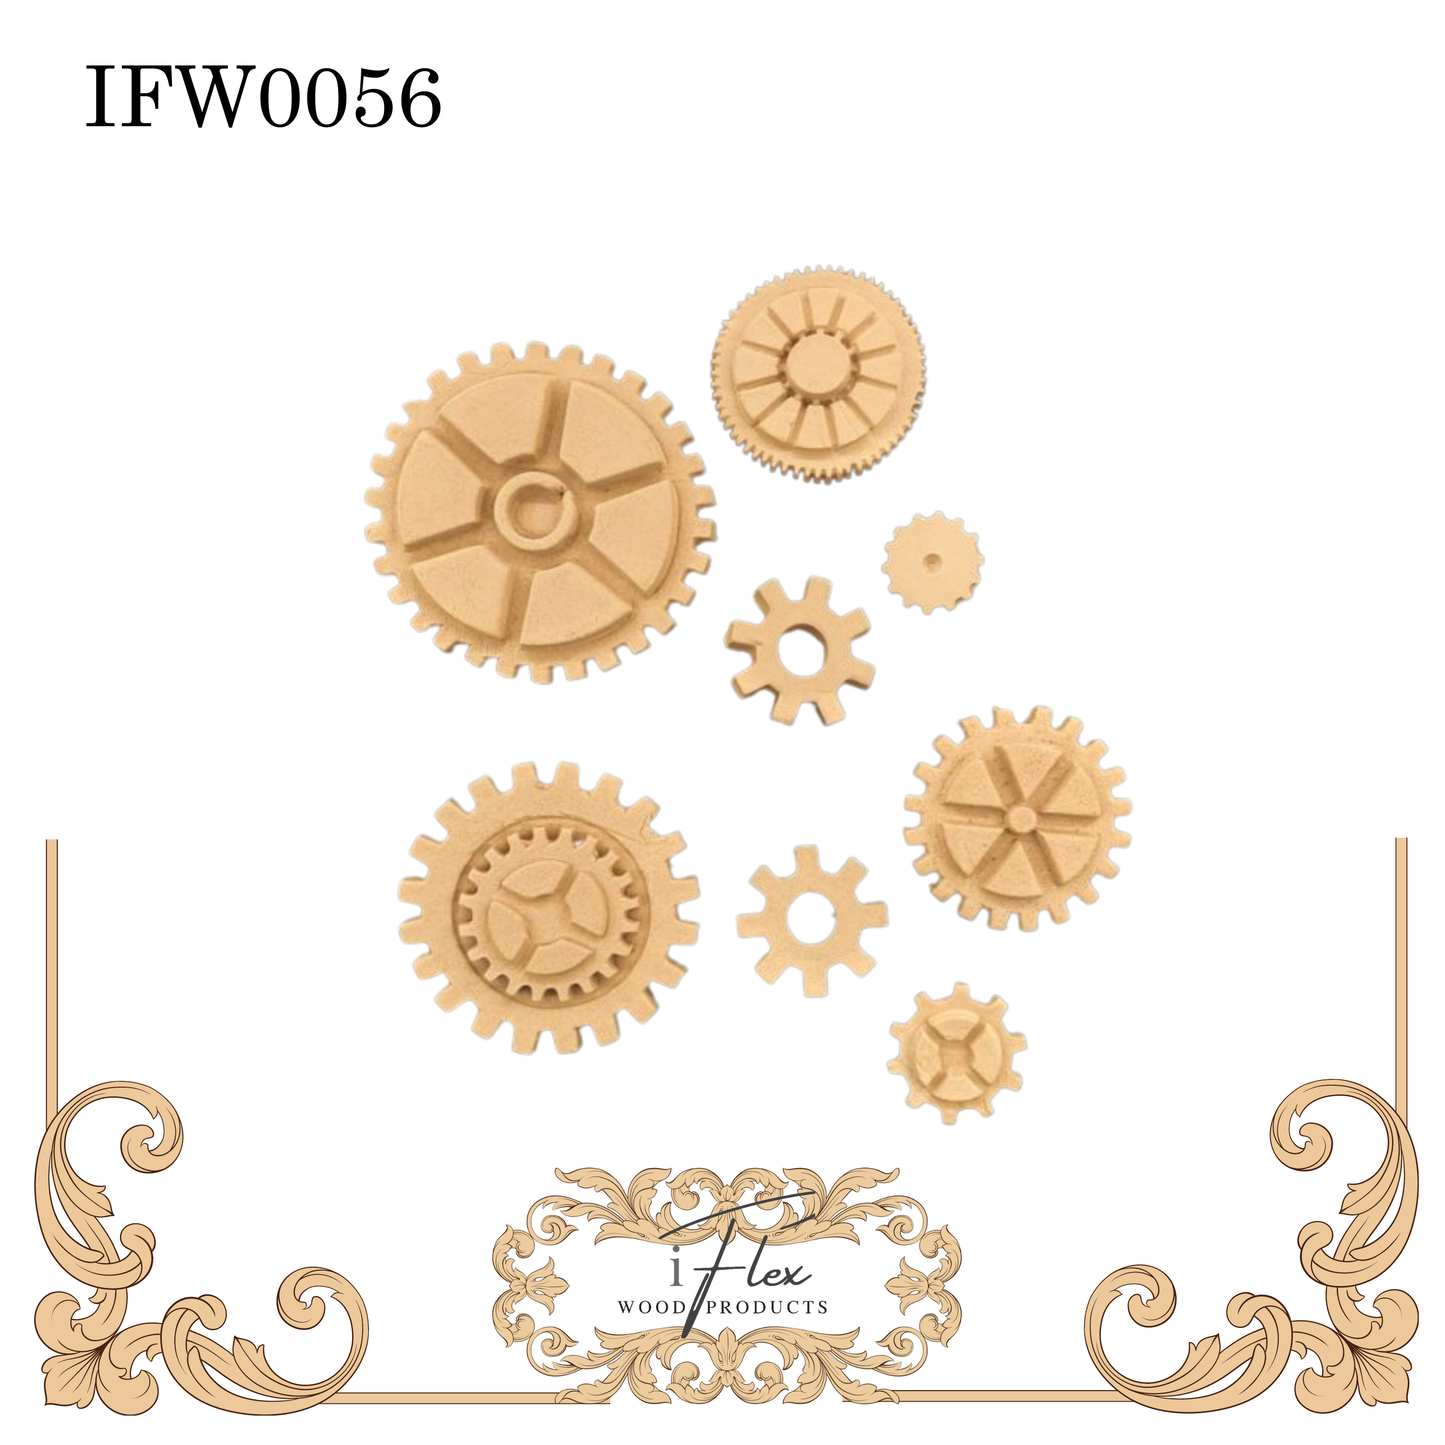 IFW 0056 Flexible moulding, gears, embellishments.